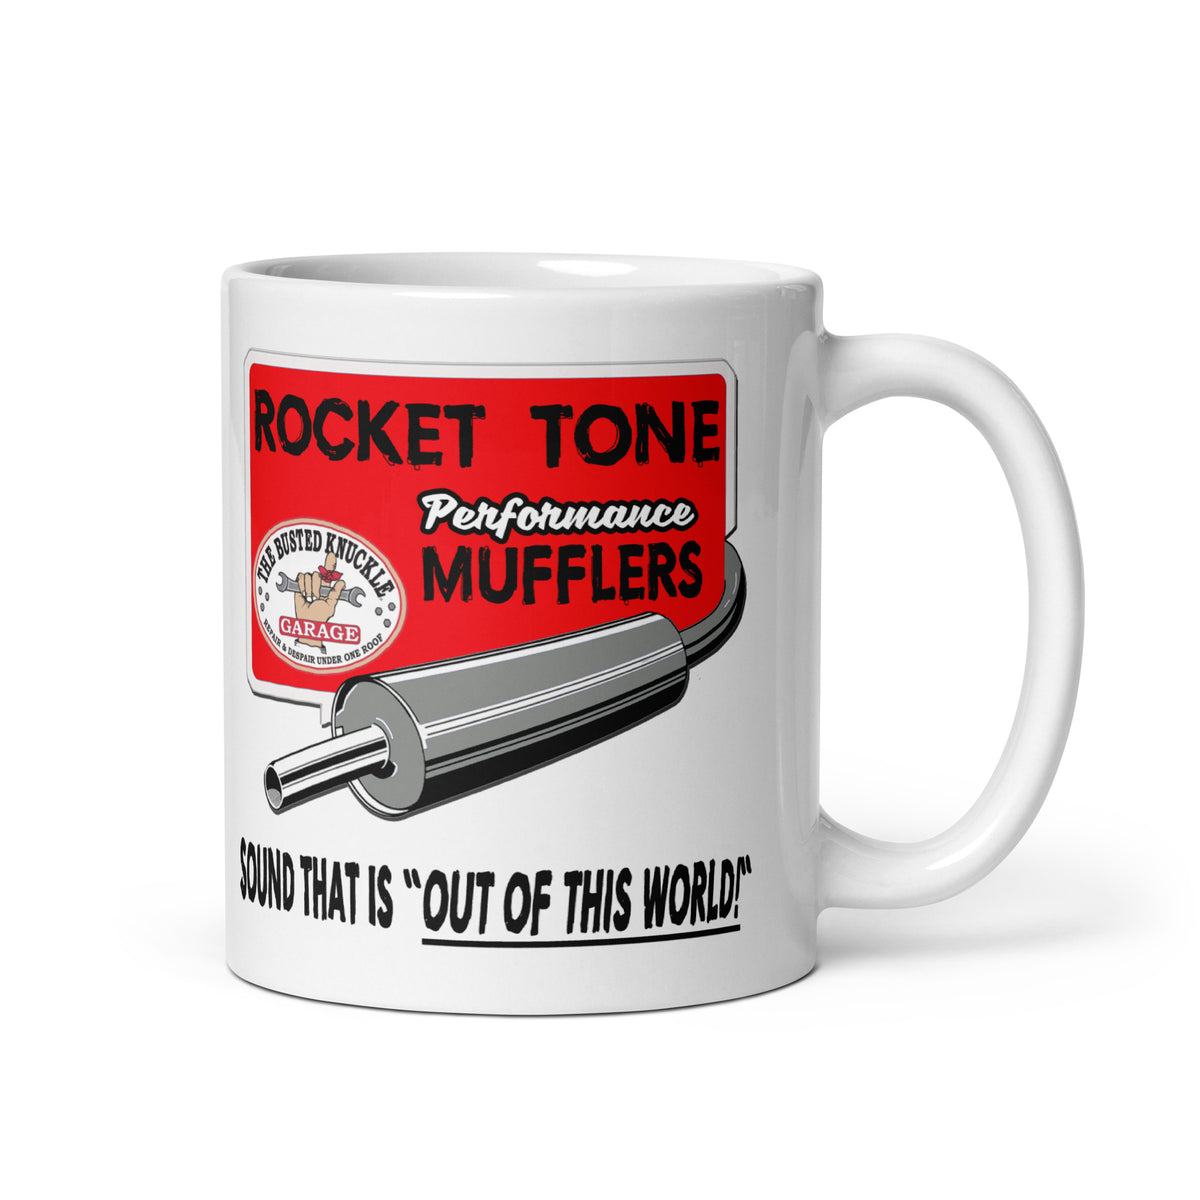 Busted Knuckle Garage Muffler Shop Coffee Mug